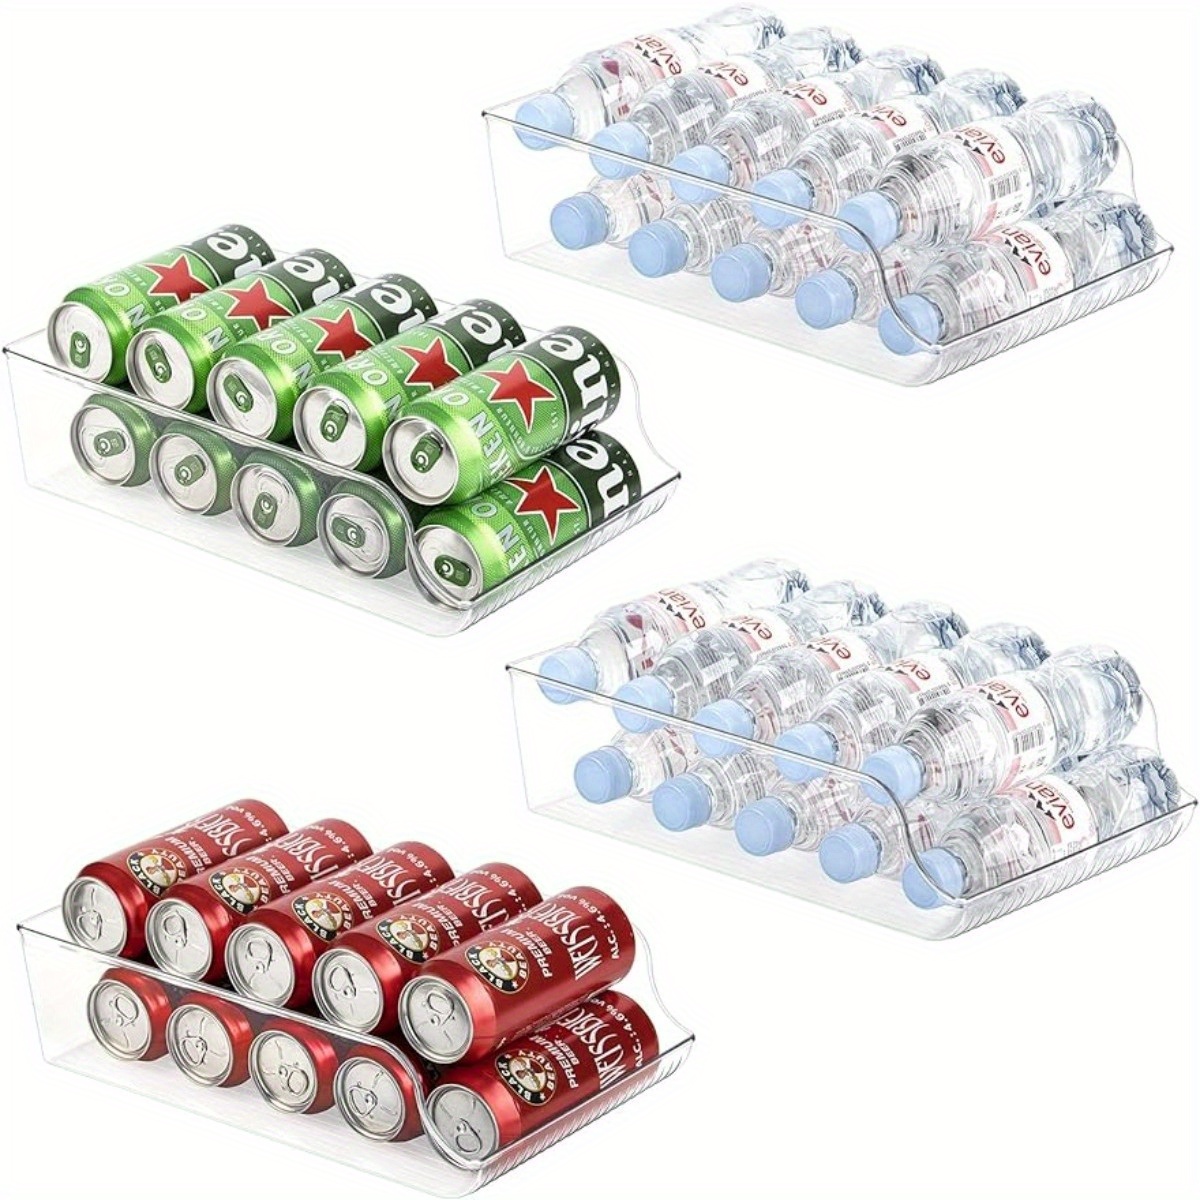 Organizador de latas de soda para refrigerador, dispensador automático  ampliado de 2 capas para refrigerador, caja de almacenamiento de latas de